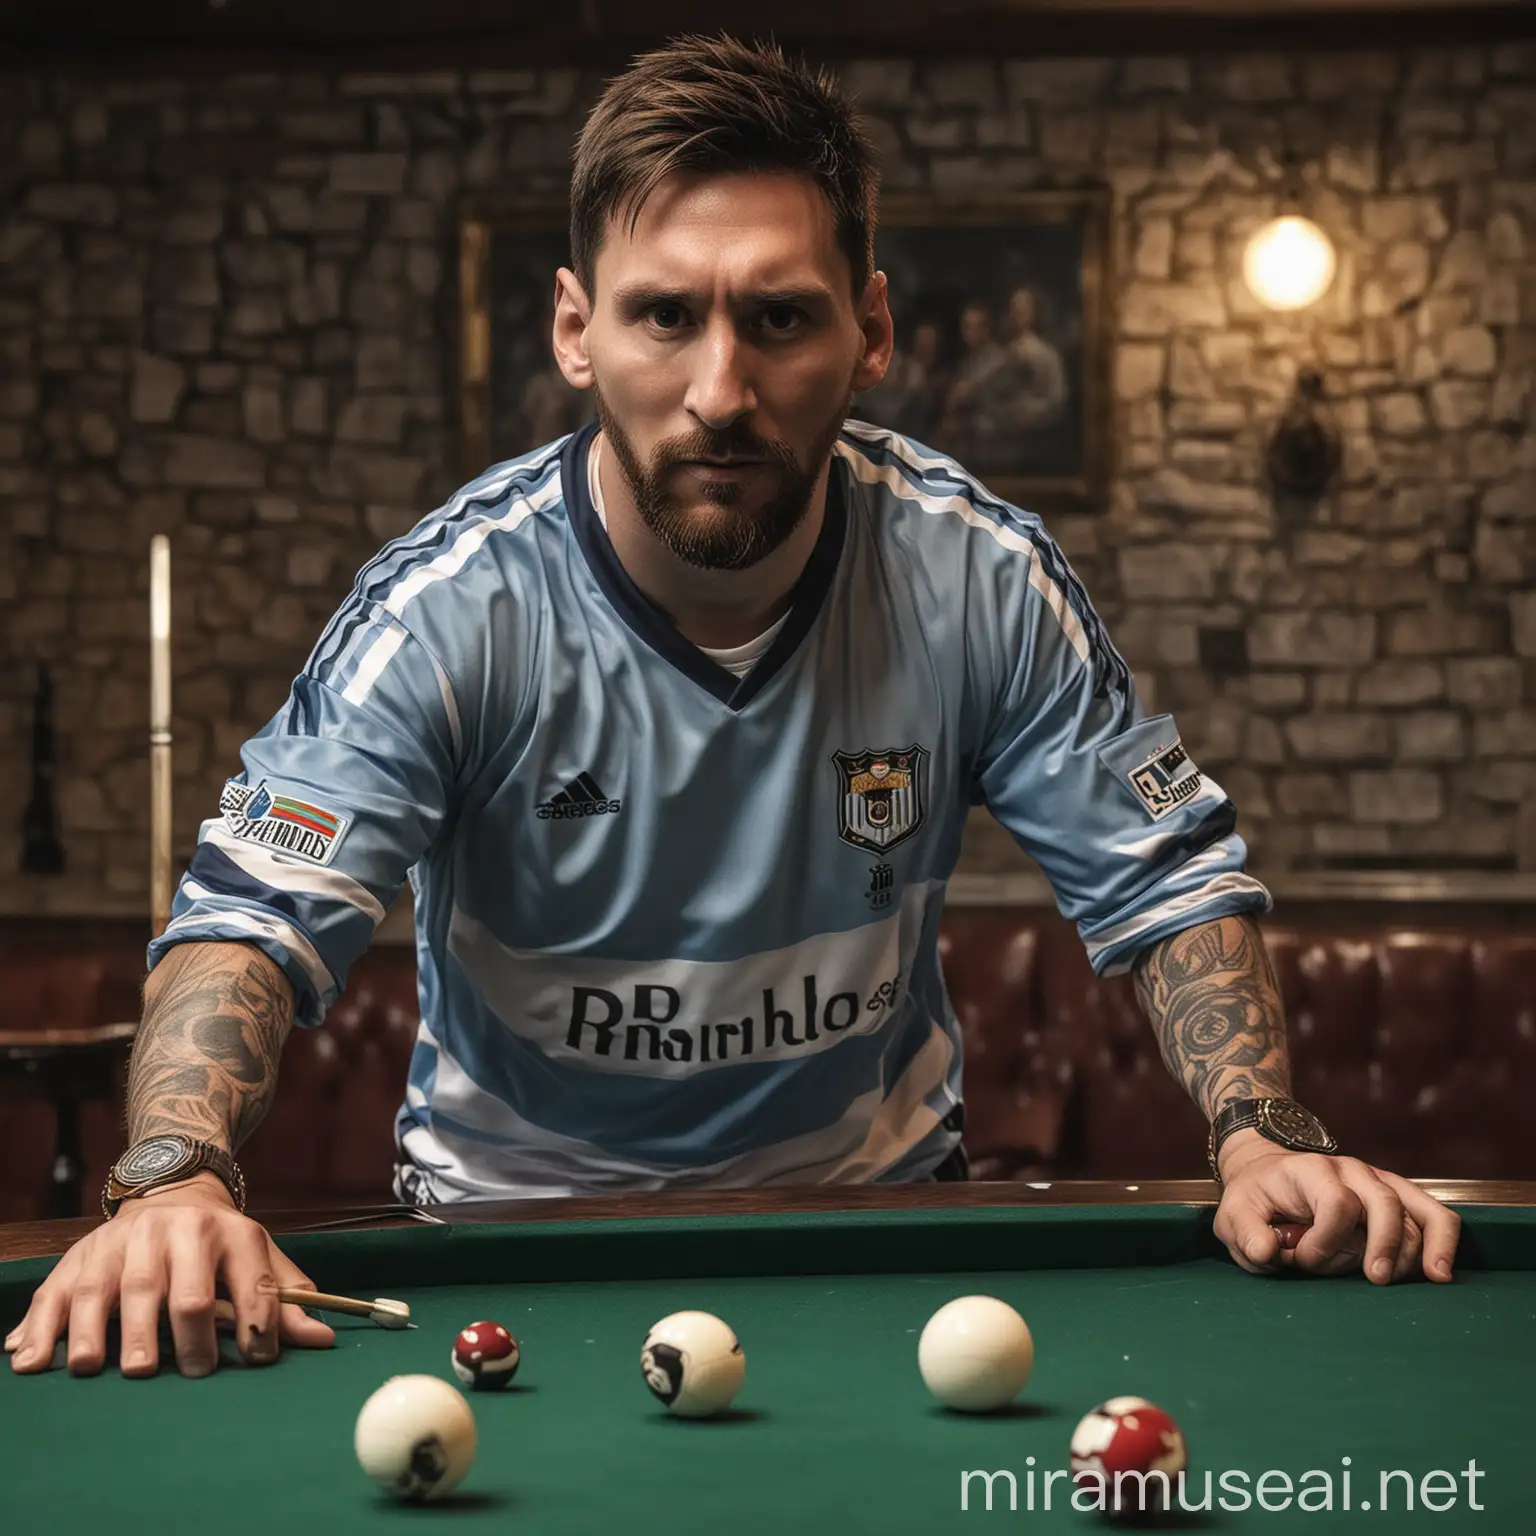 Lionel Messi Playing Billiards in Argentine Selection Uniform at Juan Barbaros Billiard Club